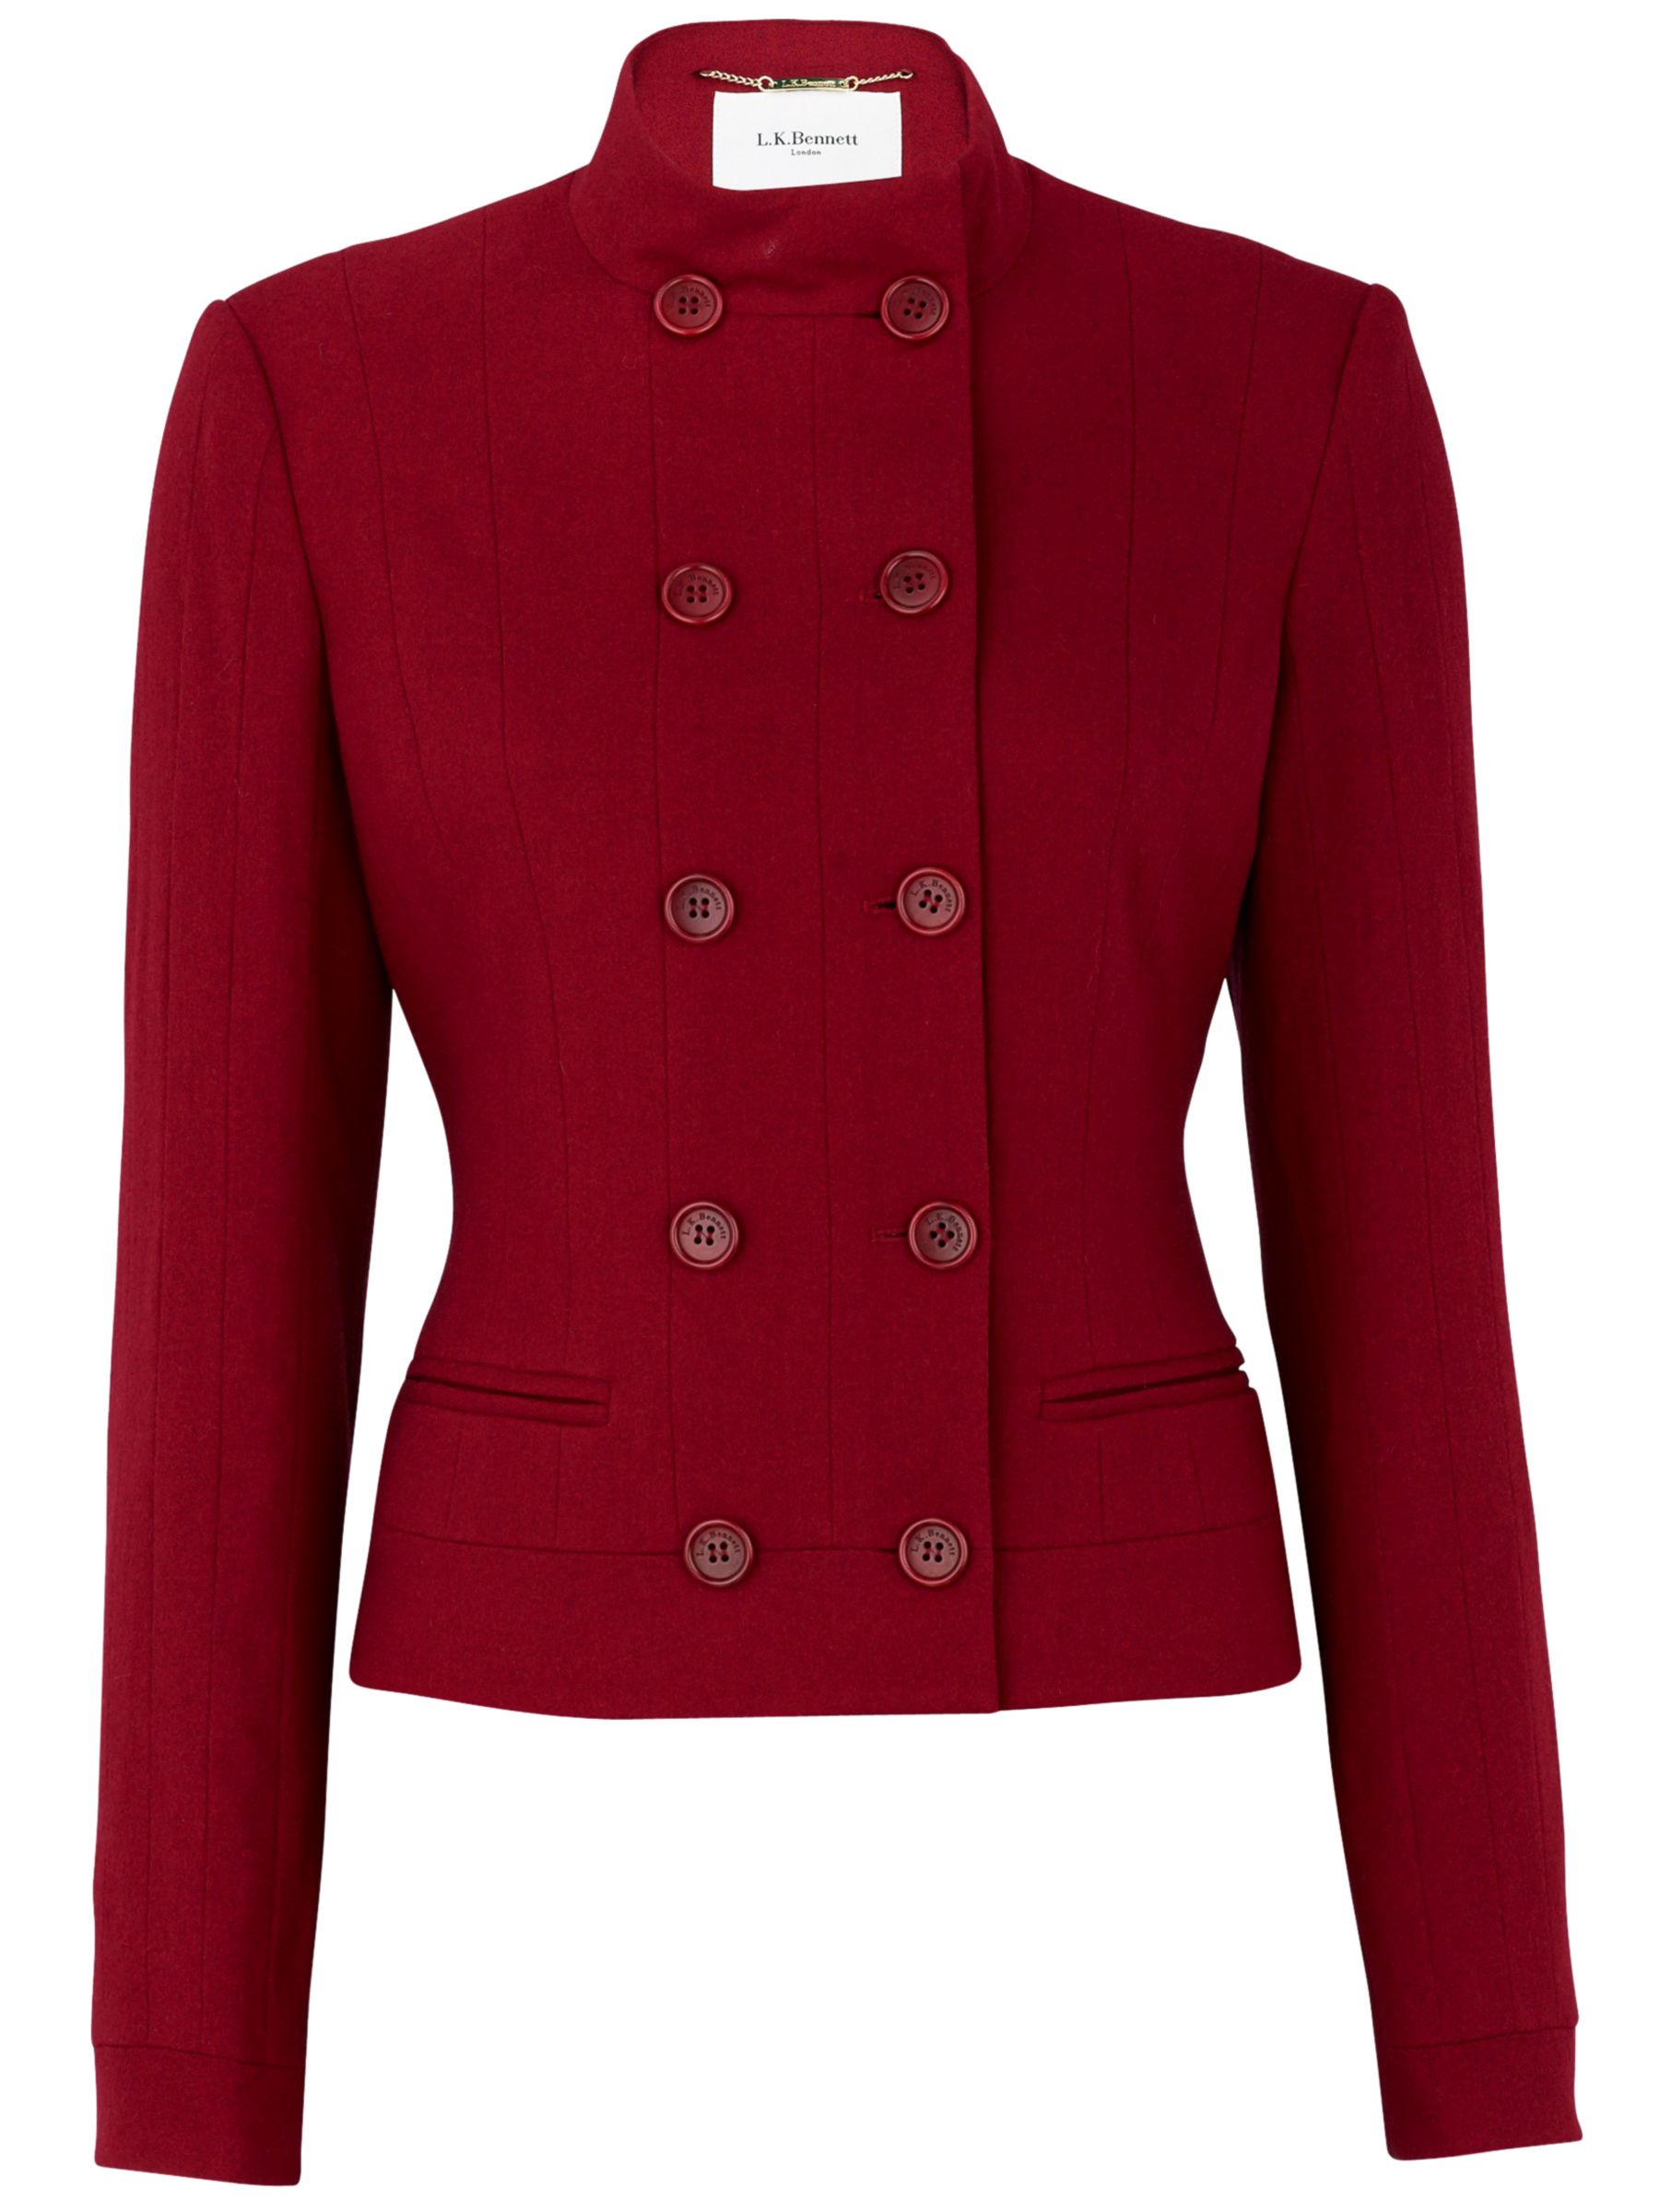 L.K. Bennett Parsons Wool Crepe Jacket, Crimson at John Lewis